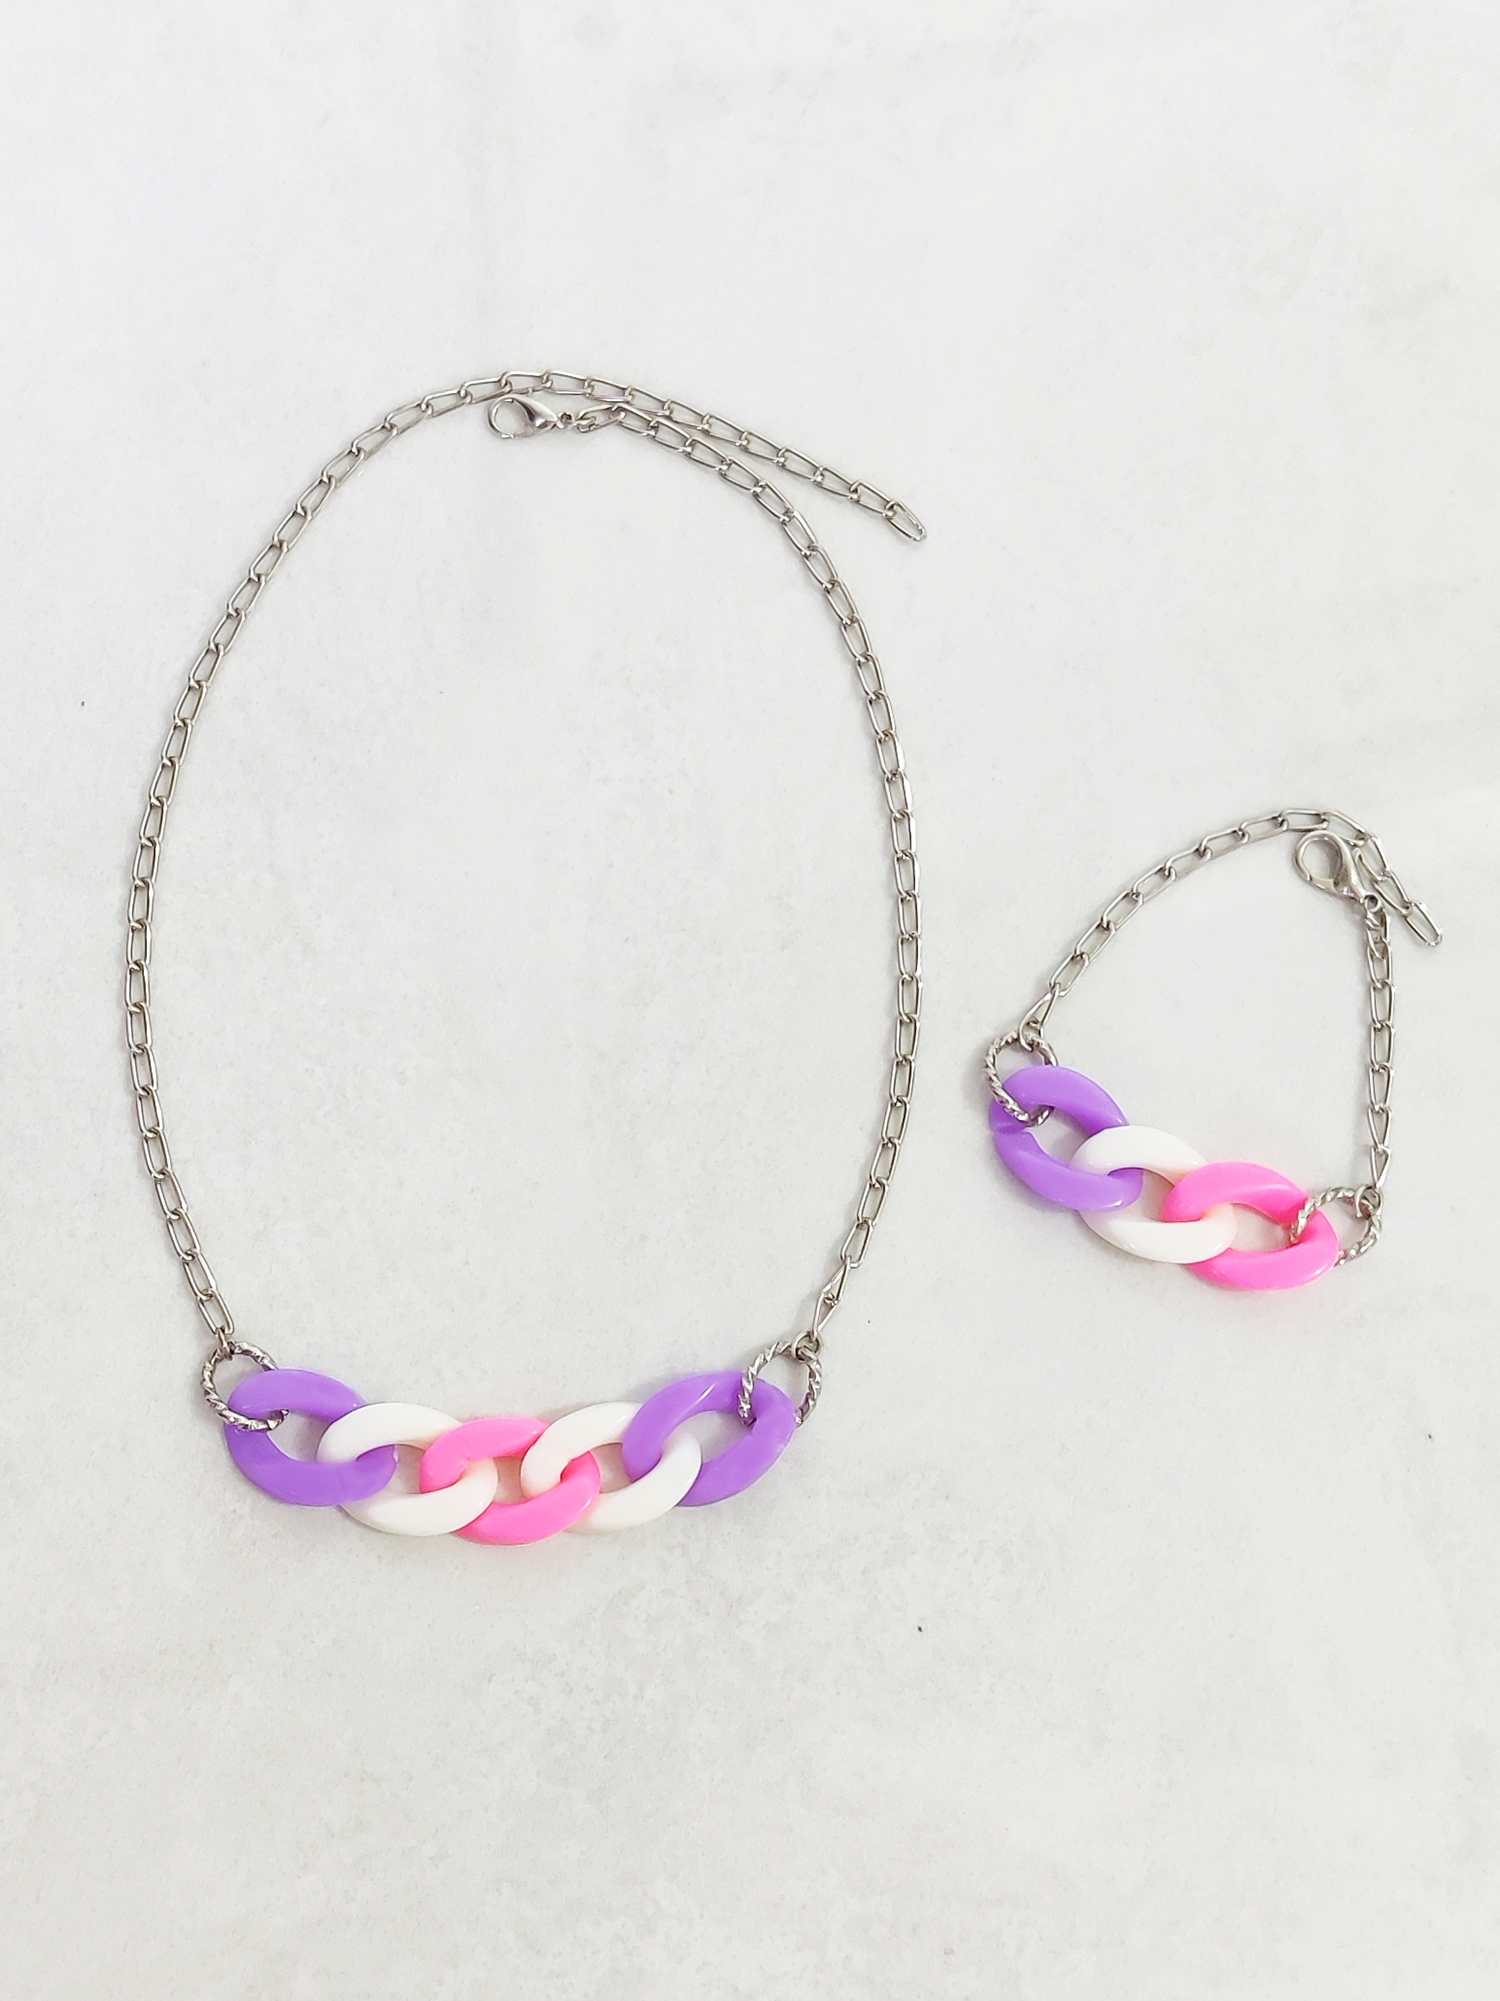 Pastel Link Necklace & Bracelet Set - Mauve, Pink